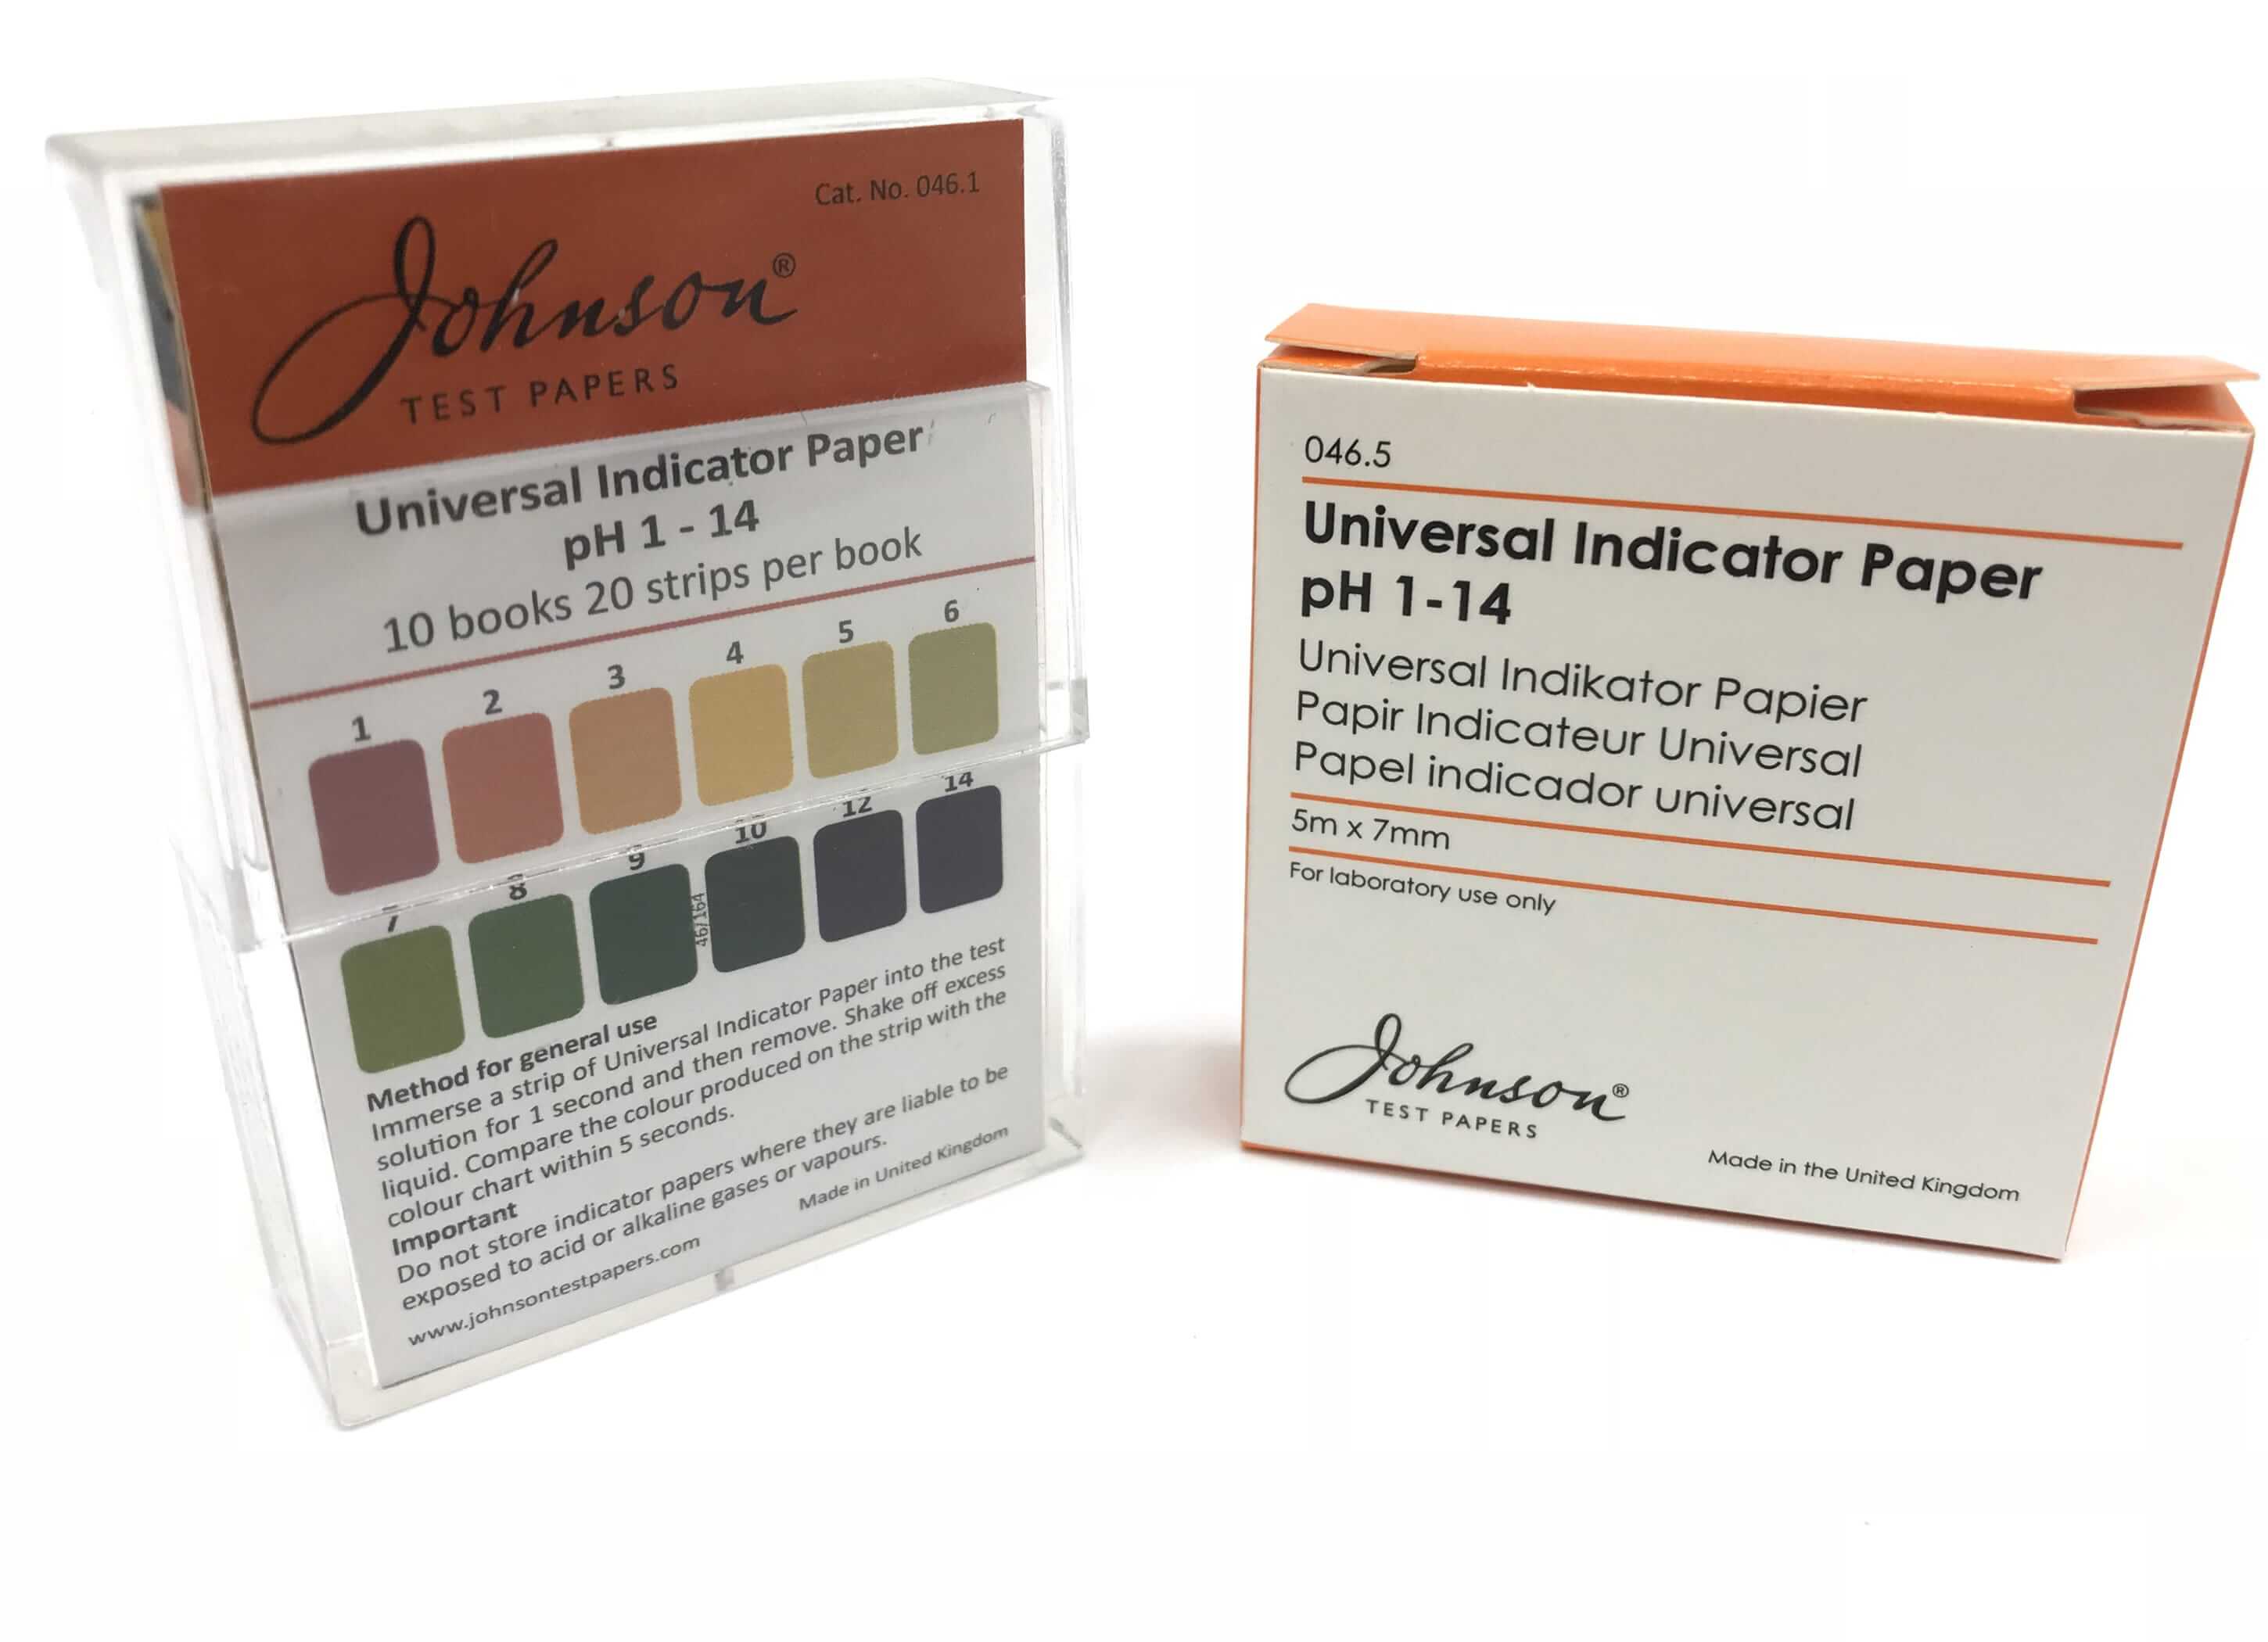 Universal Indicator Paper pH 1 - 14